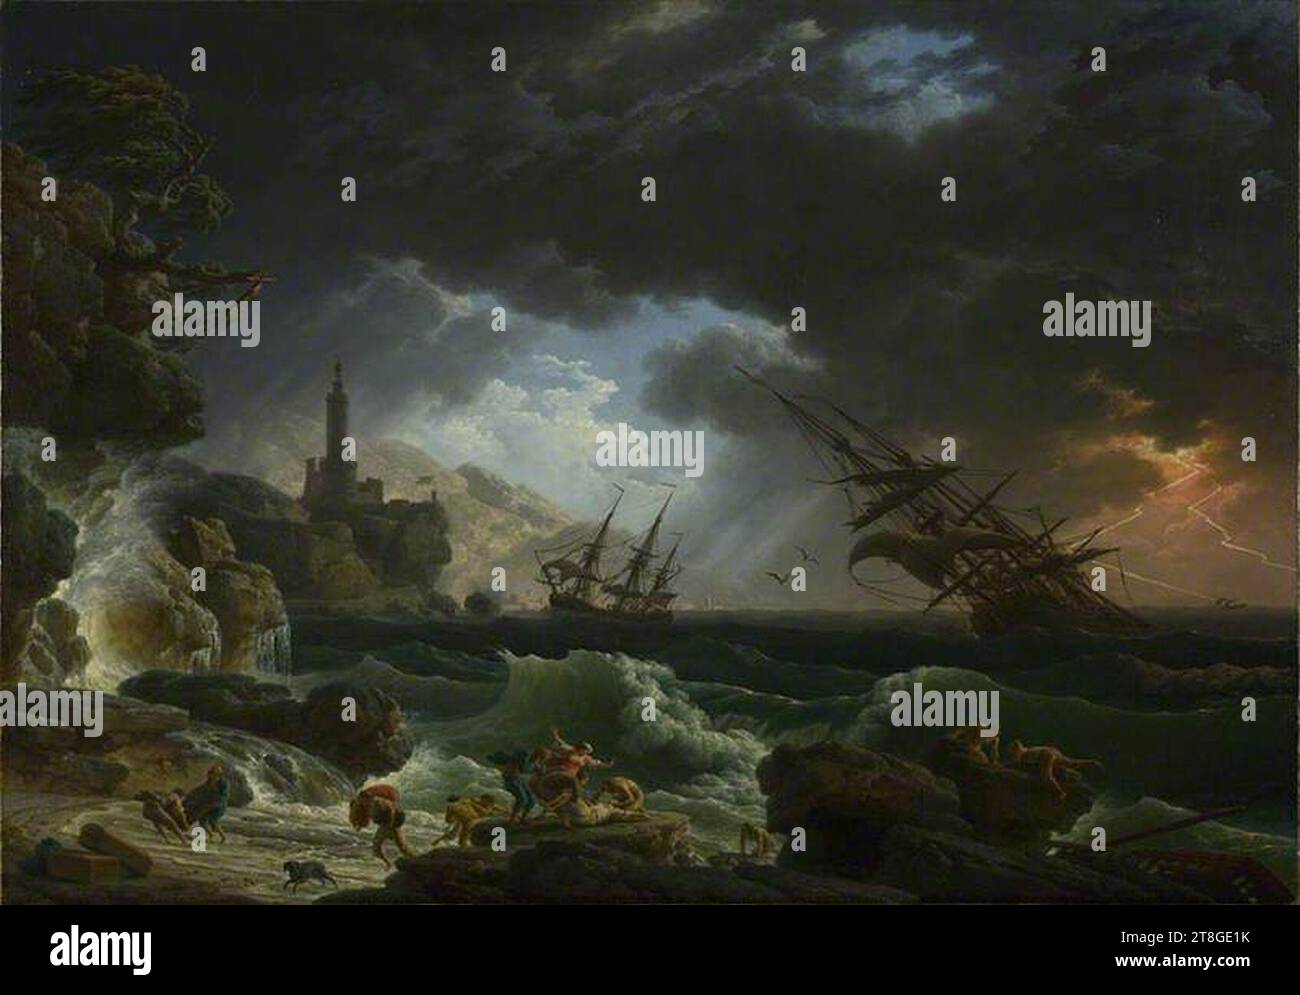 Claude-Joseph Vernet (1714-1789) - A Shipwreck in Stormy Seas Stock Photo